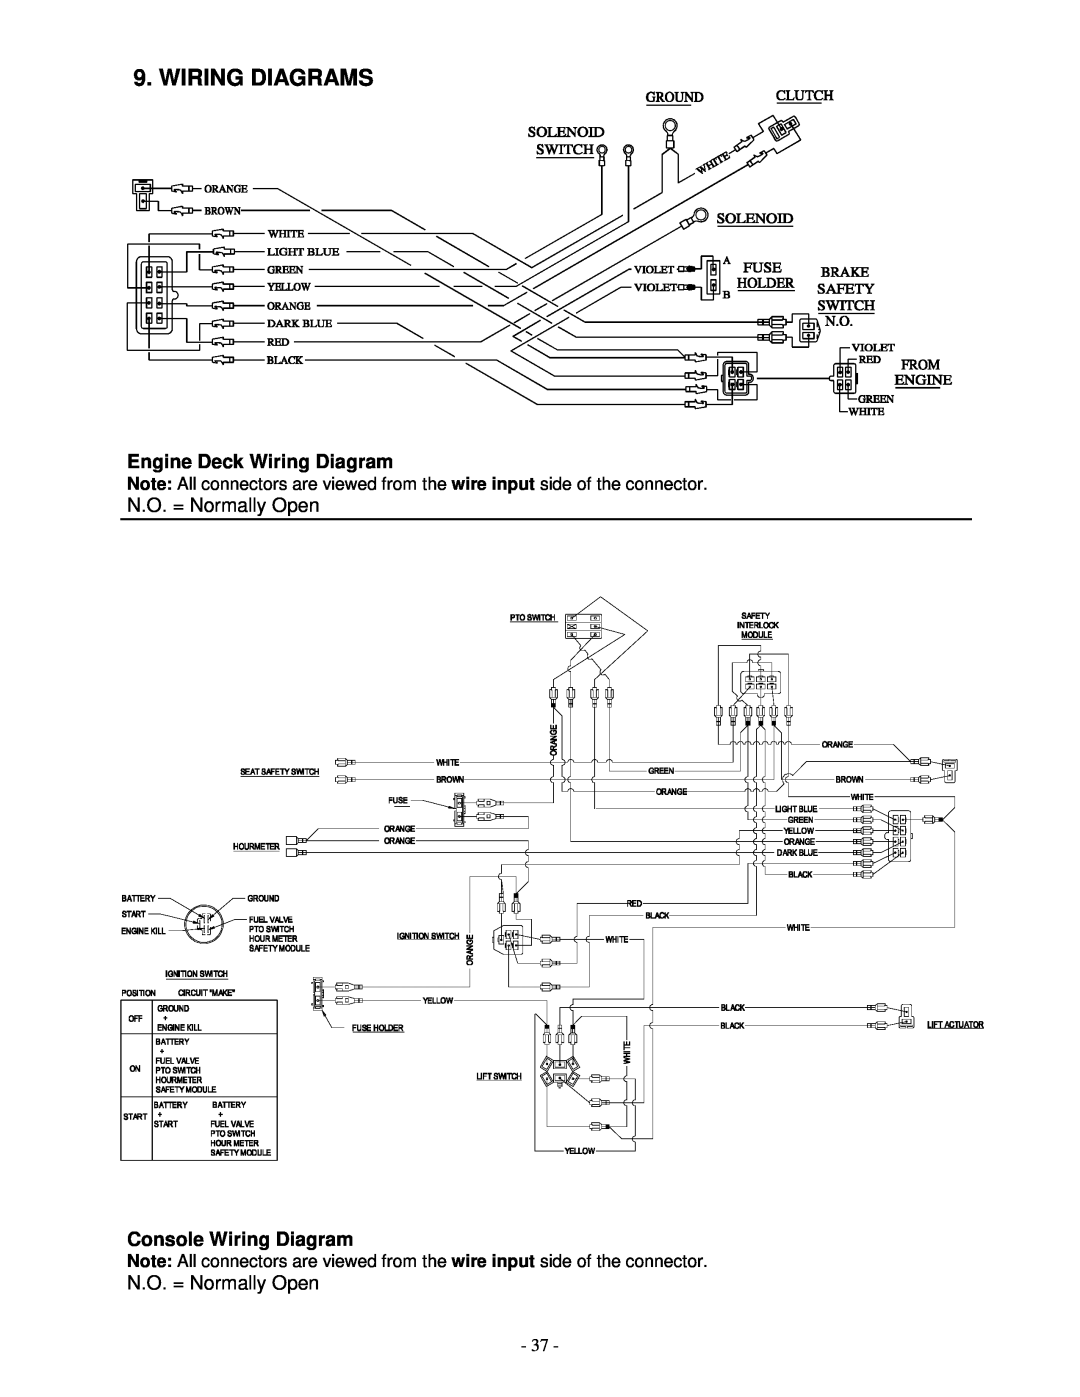 Exmark TR23KC manual Wiring Diagrams, Engine Deck Wiring Diagram, Console Wiring Diagram 